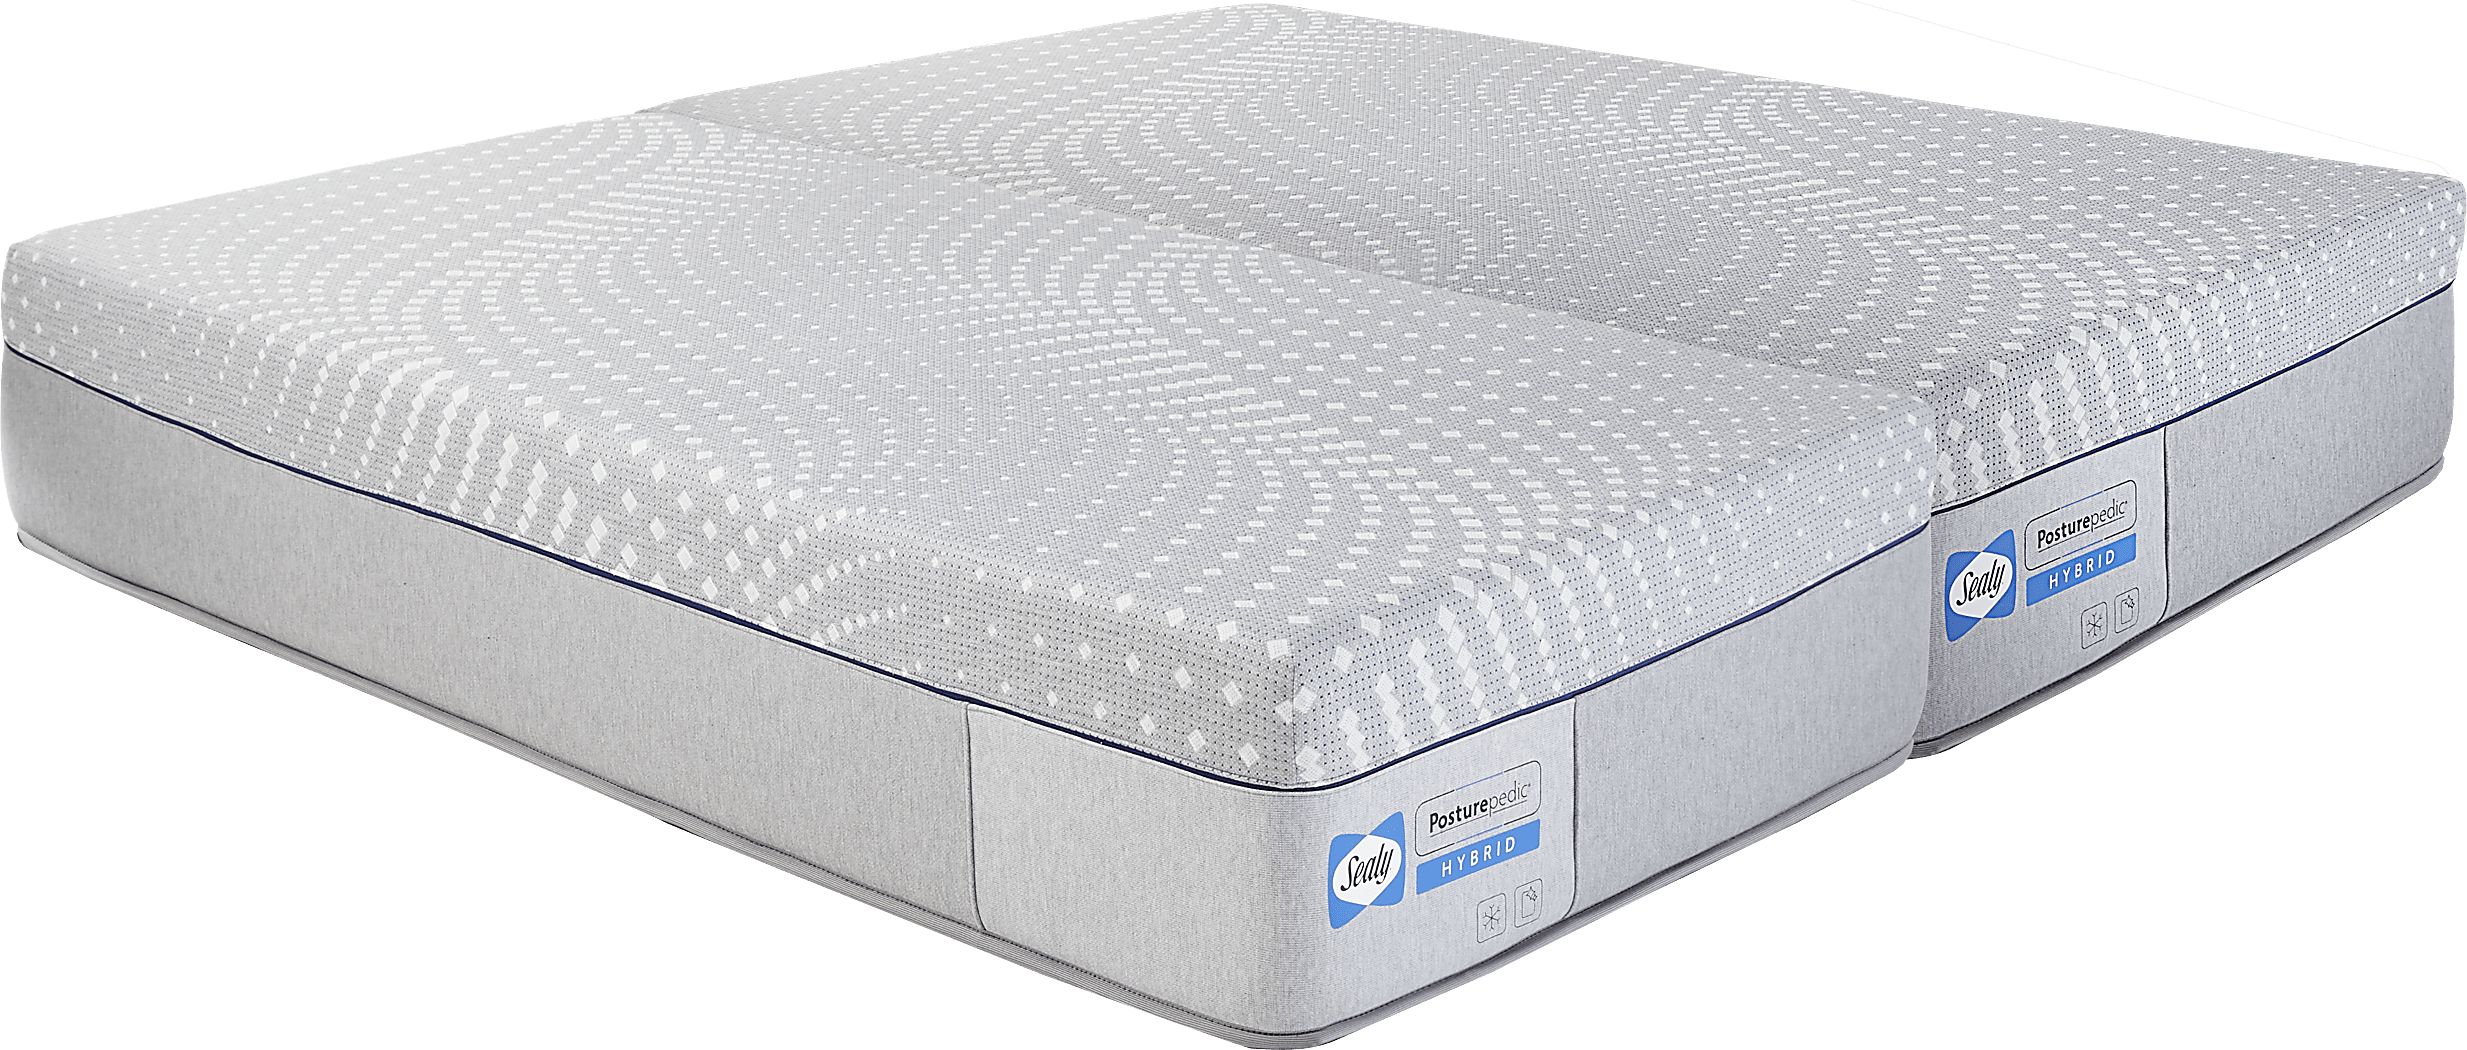 grey mattress pad 2 inch thick